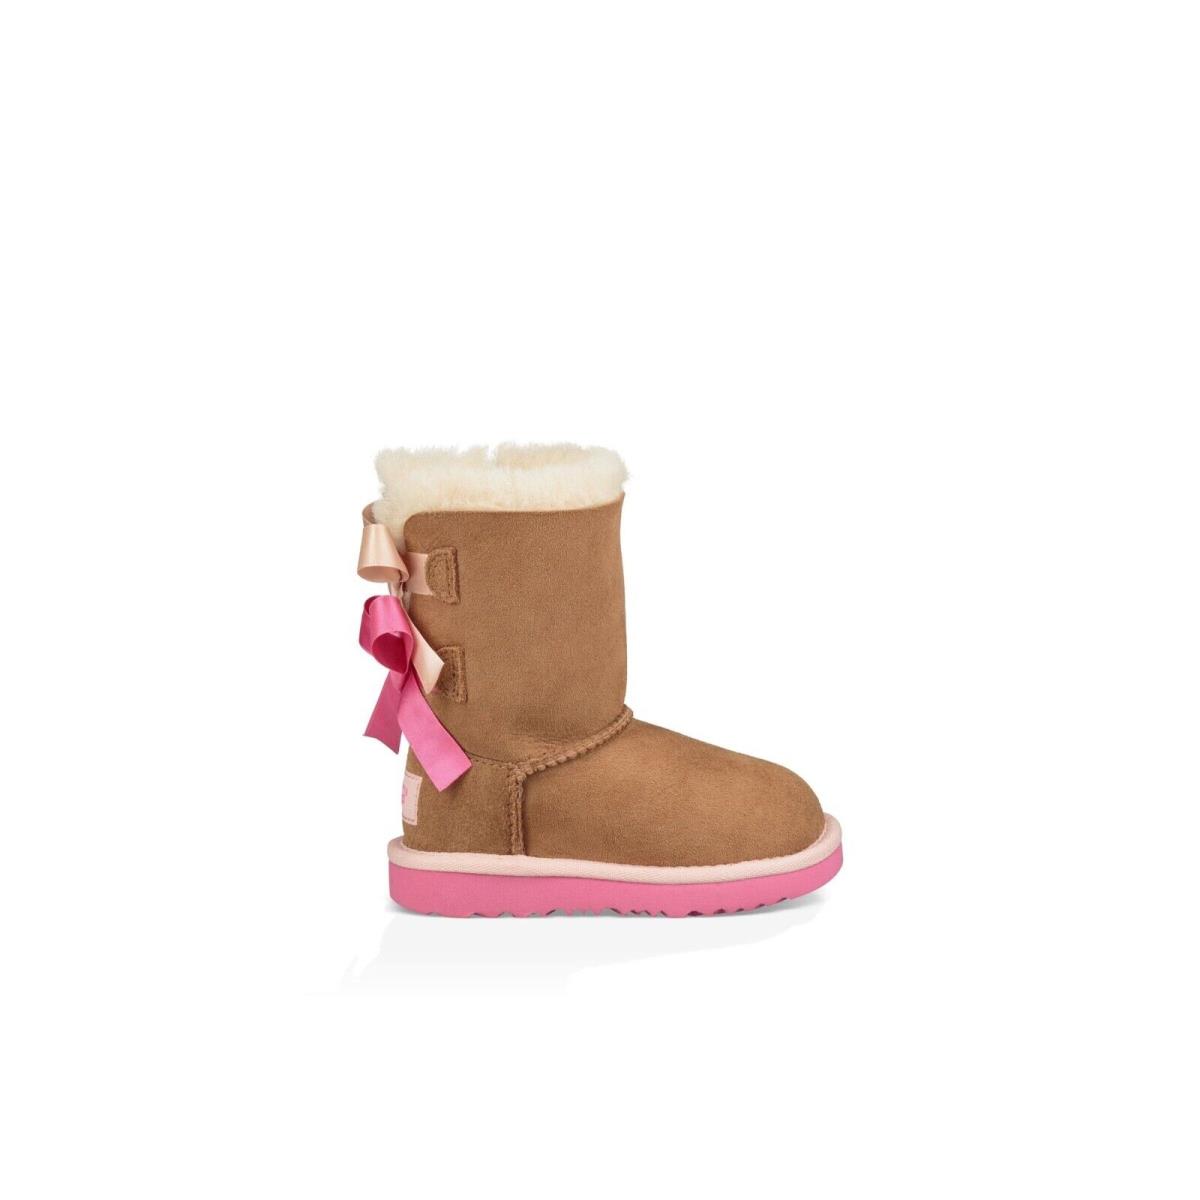 Ugg Toddler Bailey Bow II - Chestnut/pink - 1017394T - sz 7 - Chestnut Pink